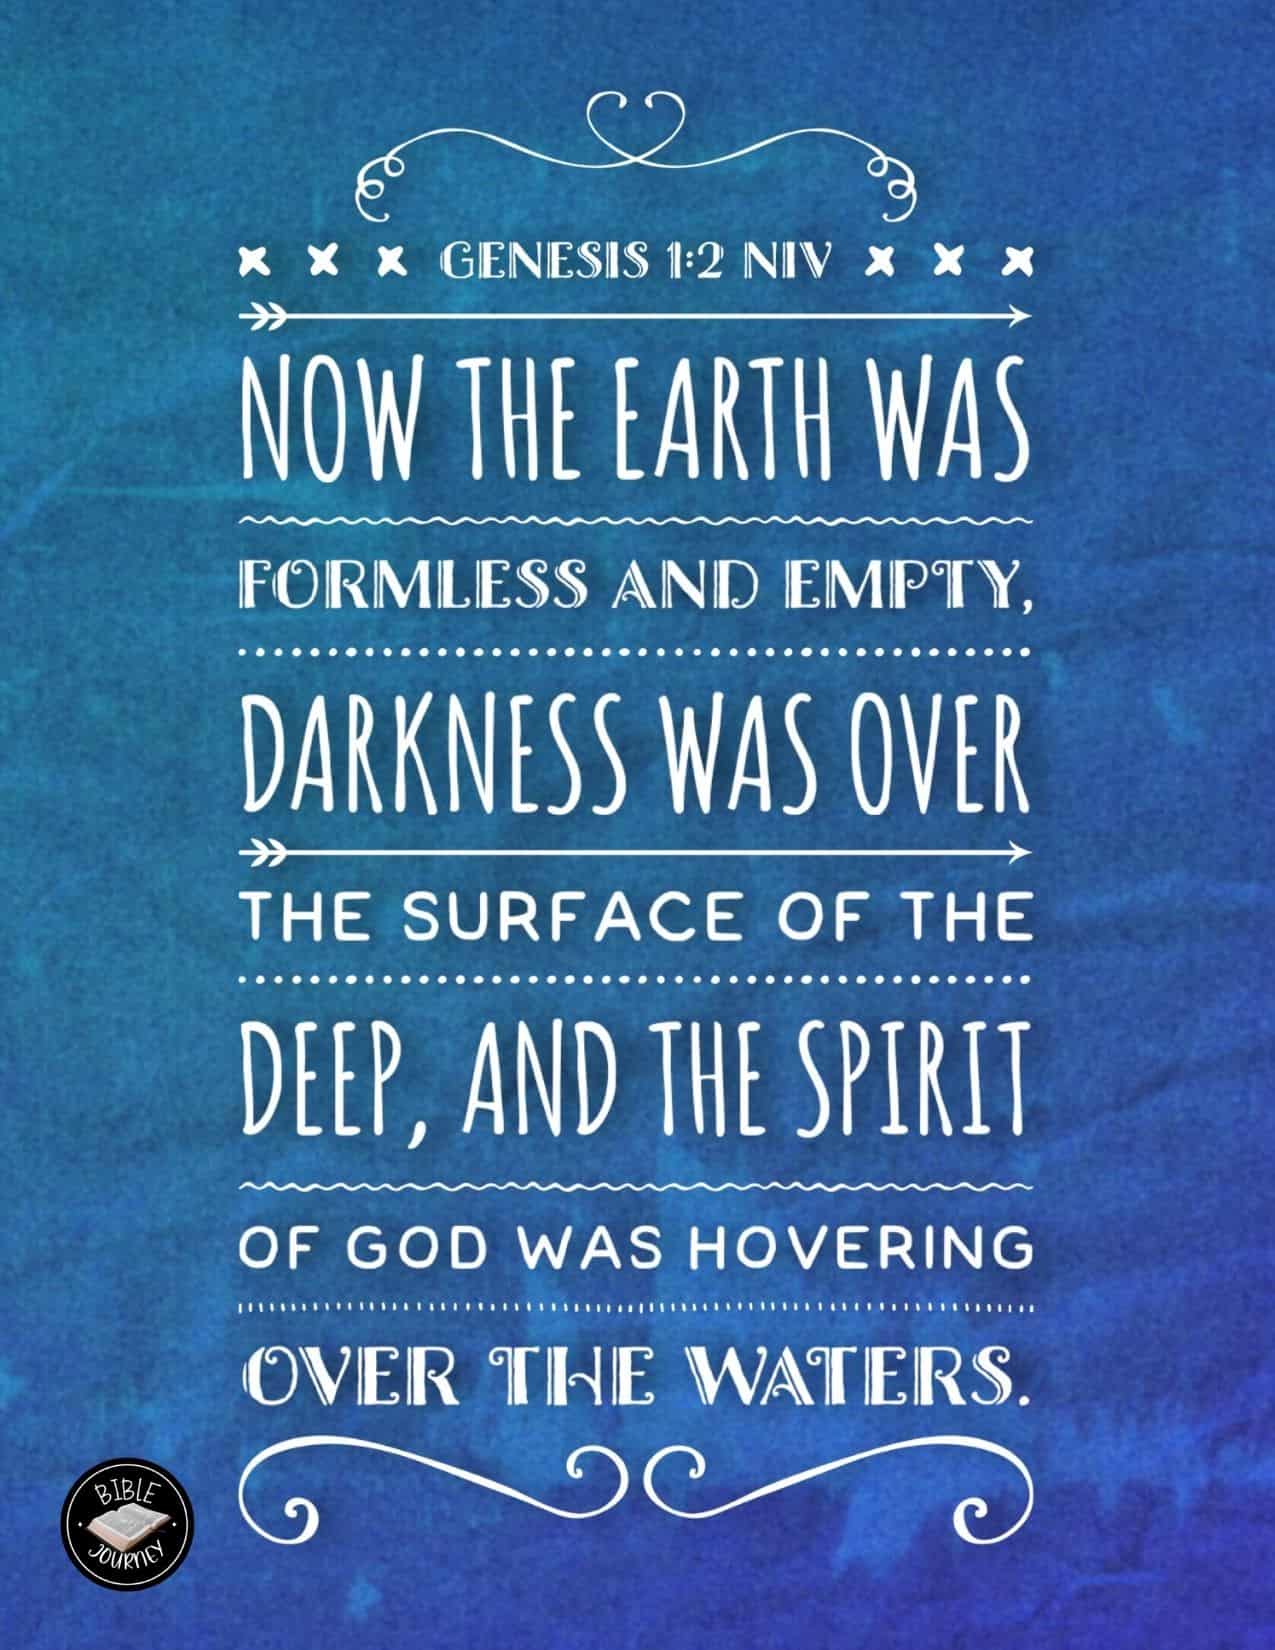 Genesis Niv Picture Bible Verse